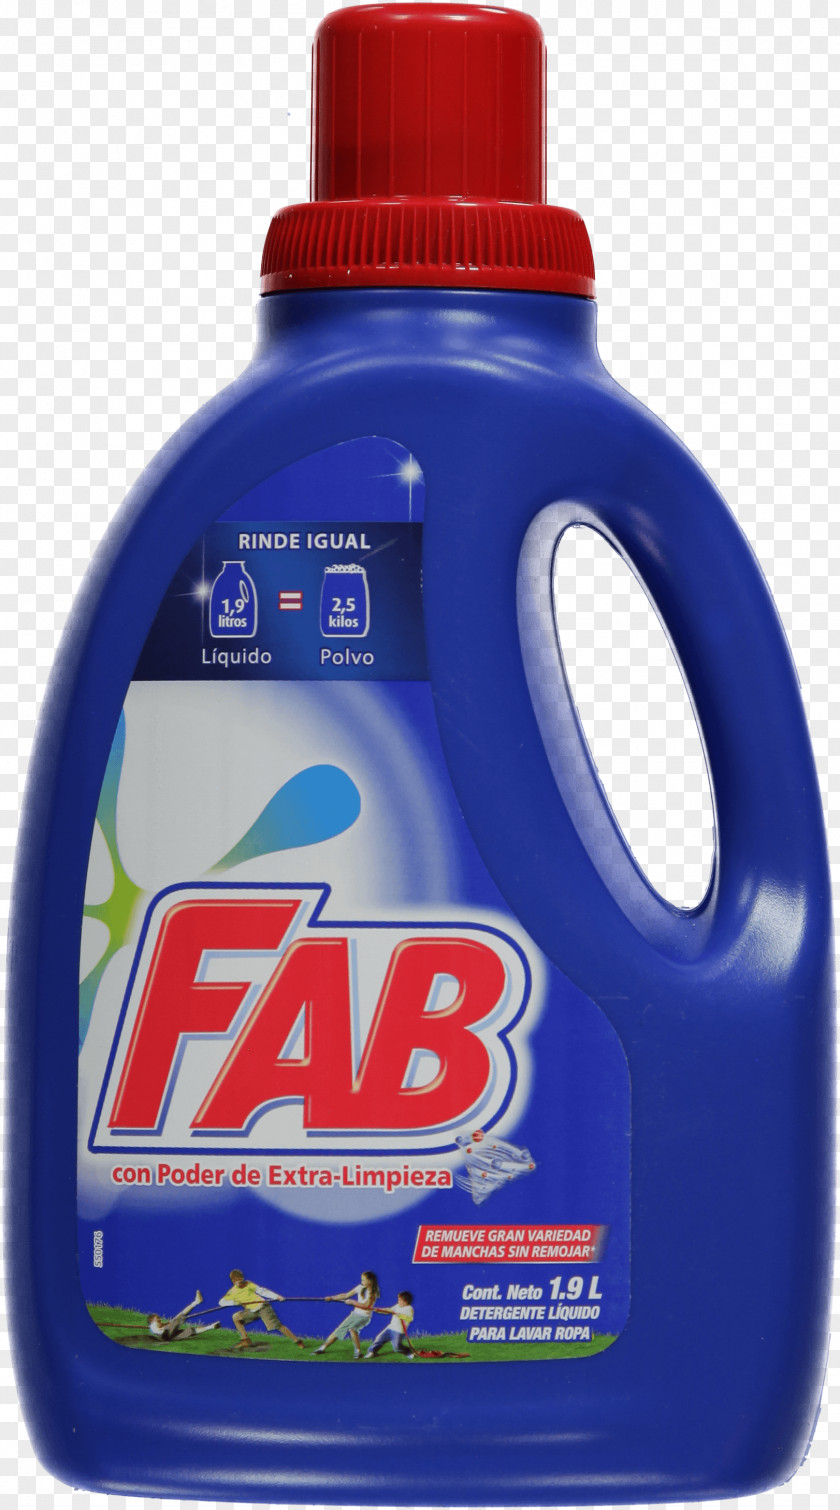 Soap Laundry Detergent Liquid Fluid PNG